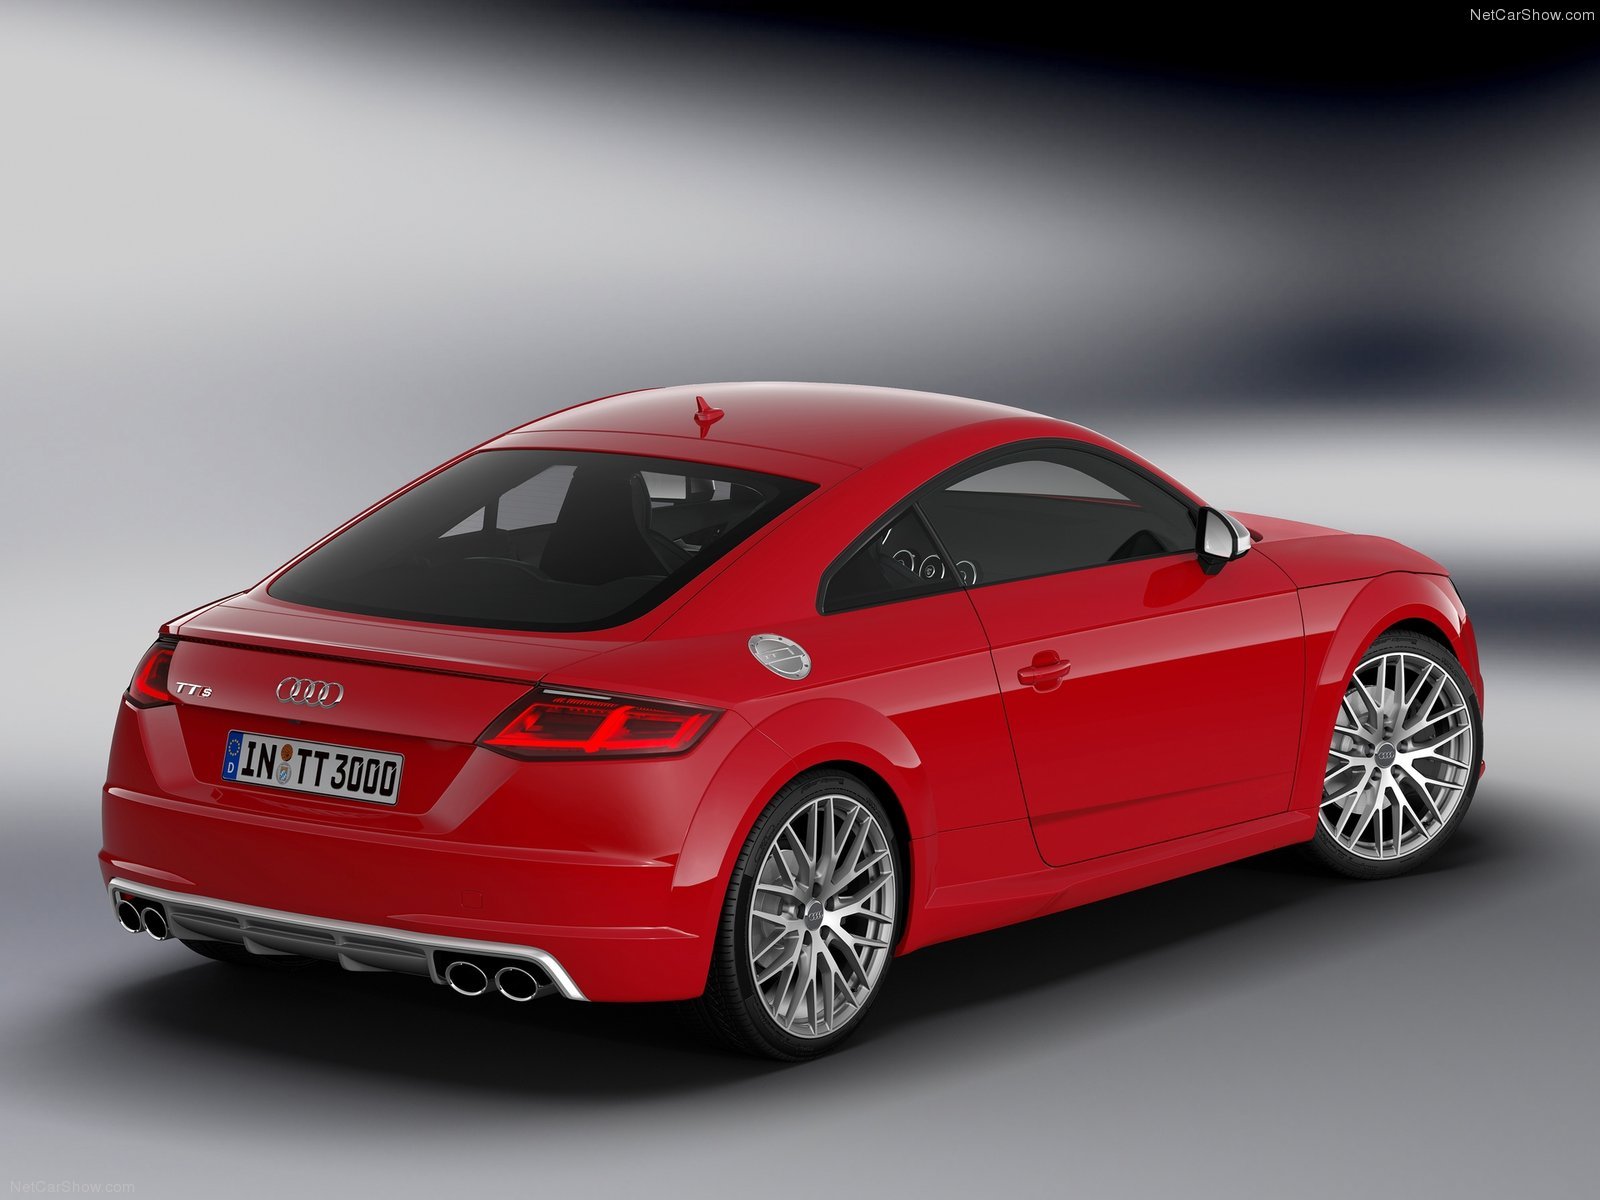 2015, 4000x3000, Audi, Car, Coupe, Germany, Red, Sport, Sportcar, Supercar, Tts, Wallpaper Wallpaper